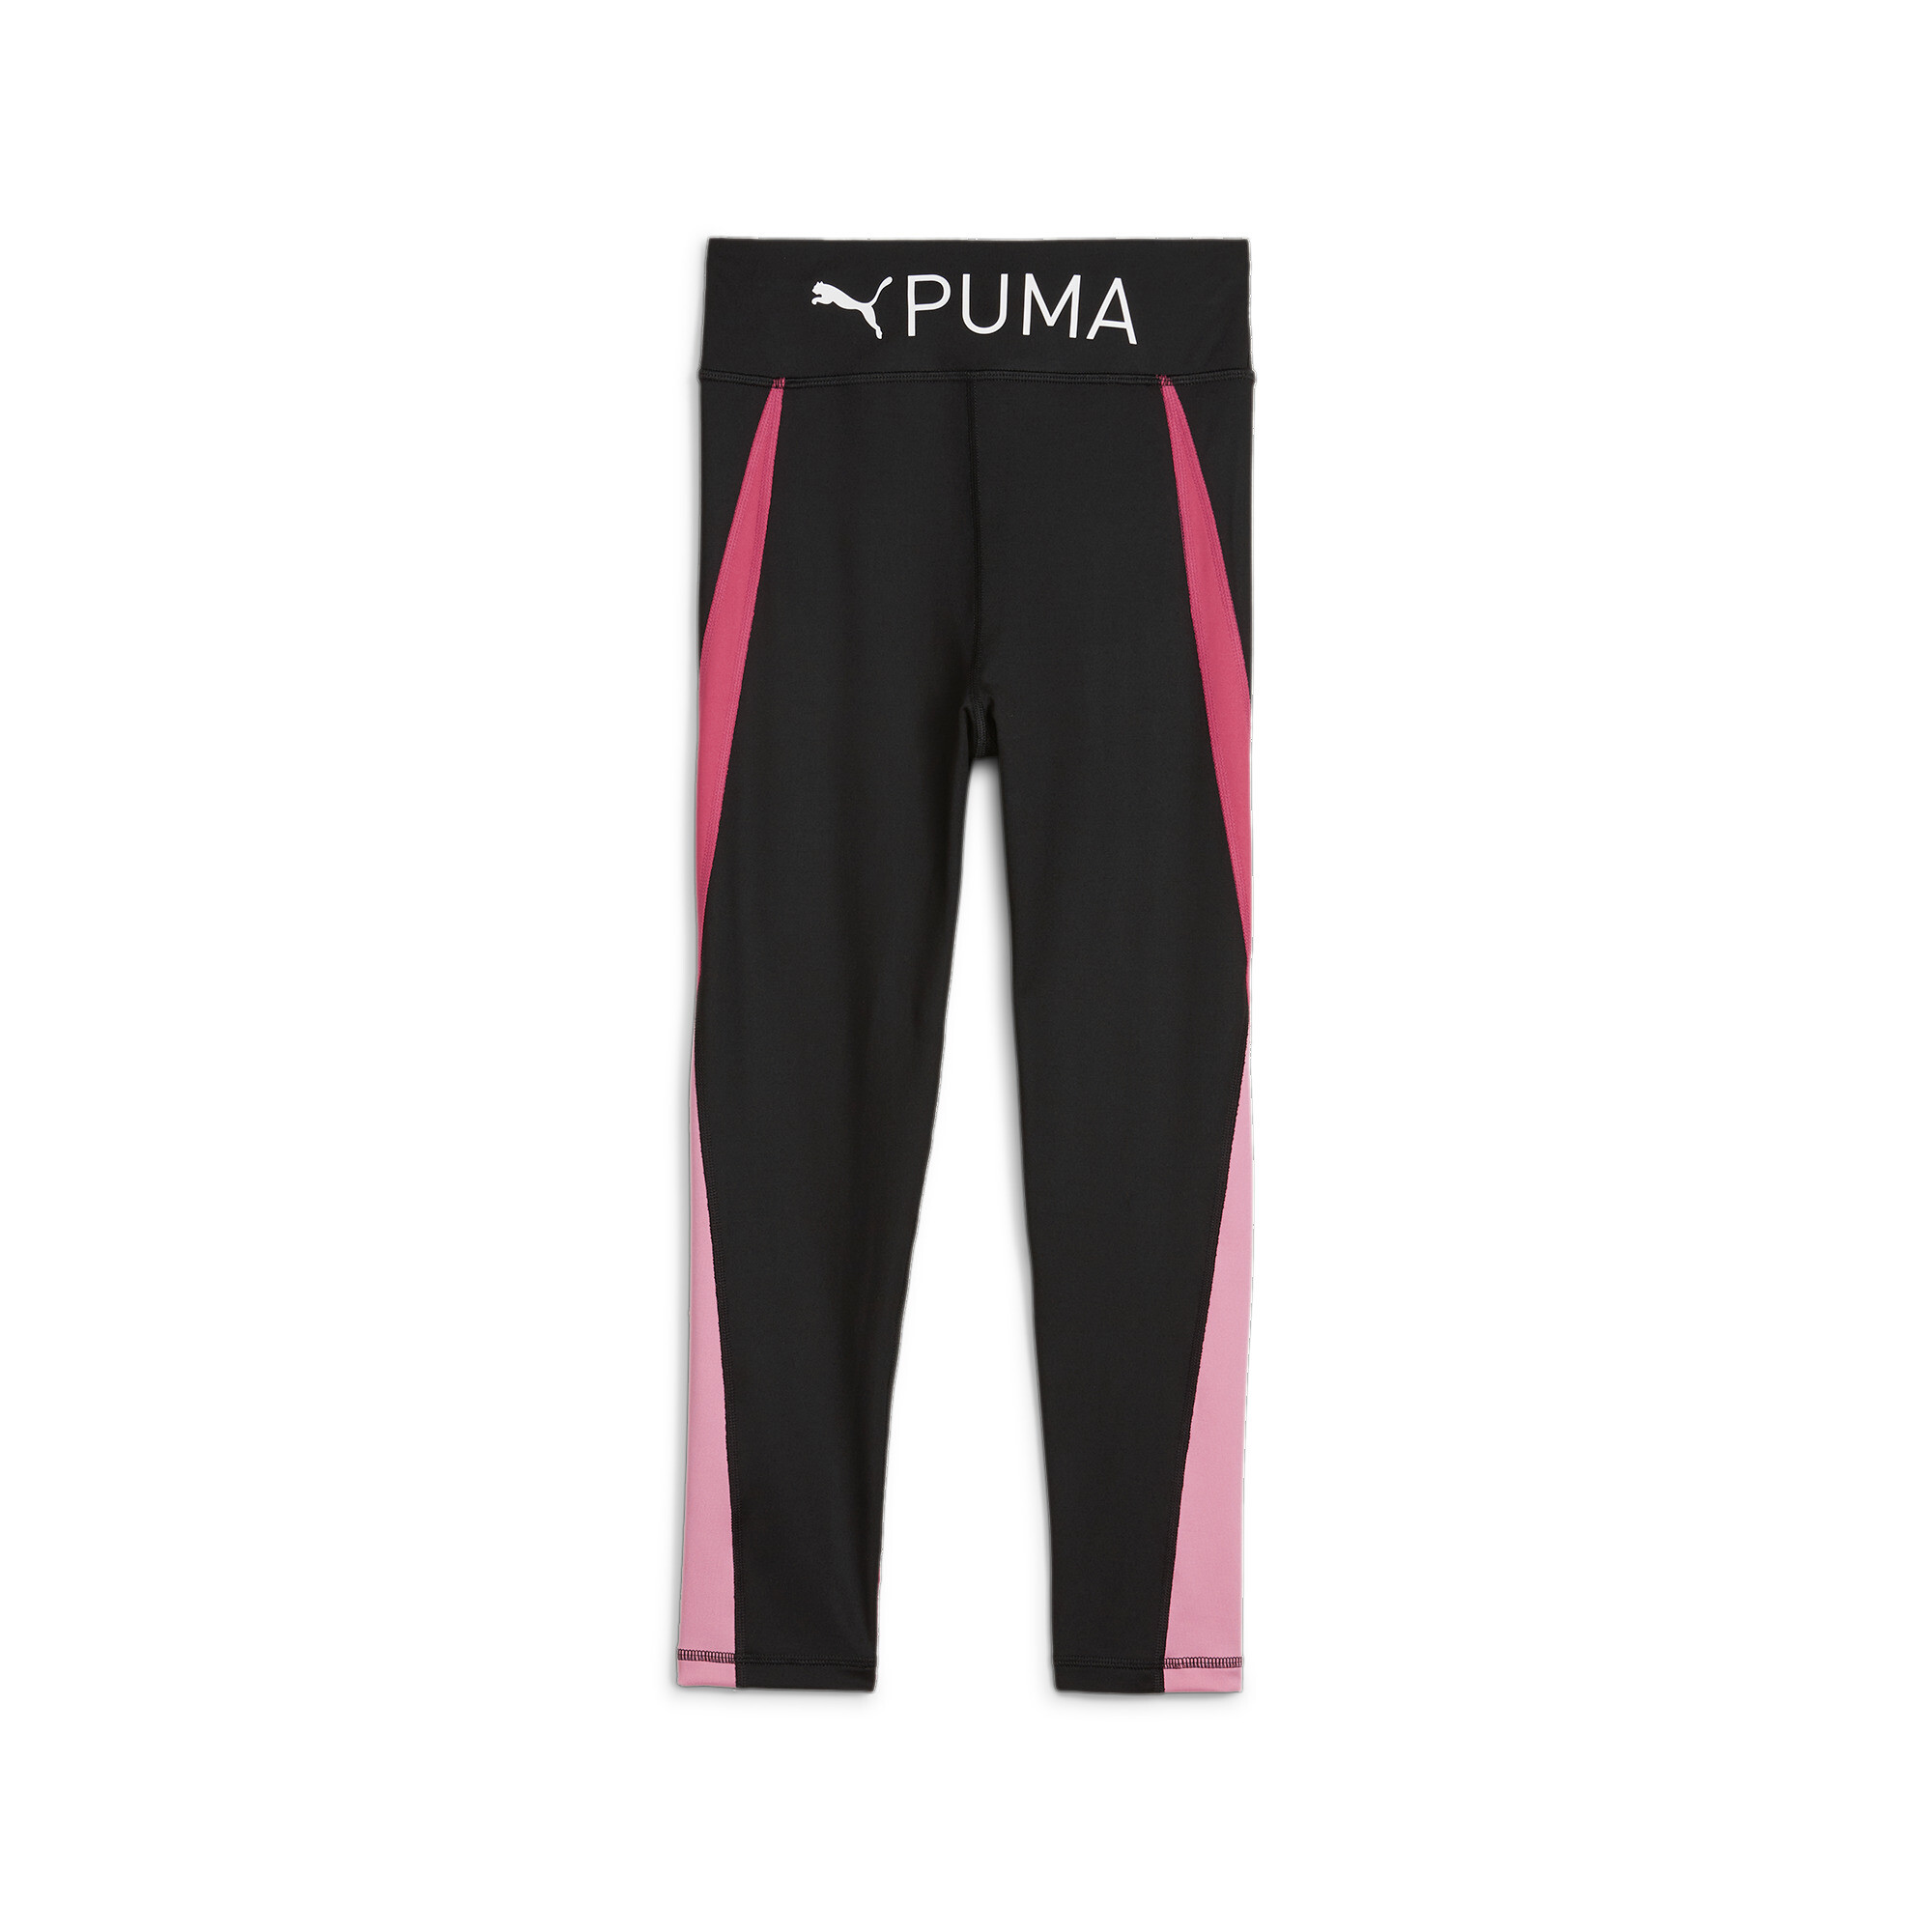 Women's Puma FIT Youth 7/8 Tights, Black, Size 7-8Y, Shop